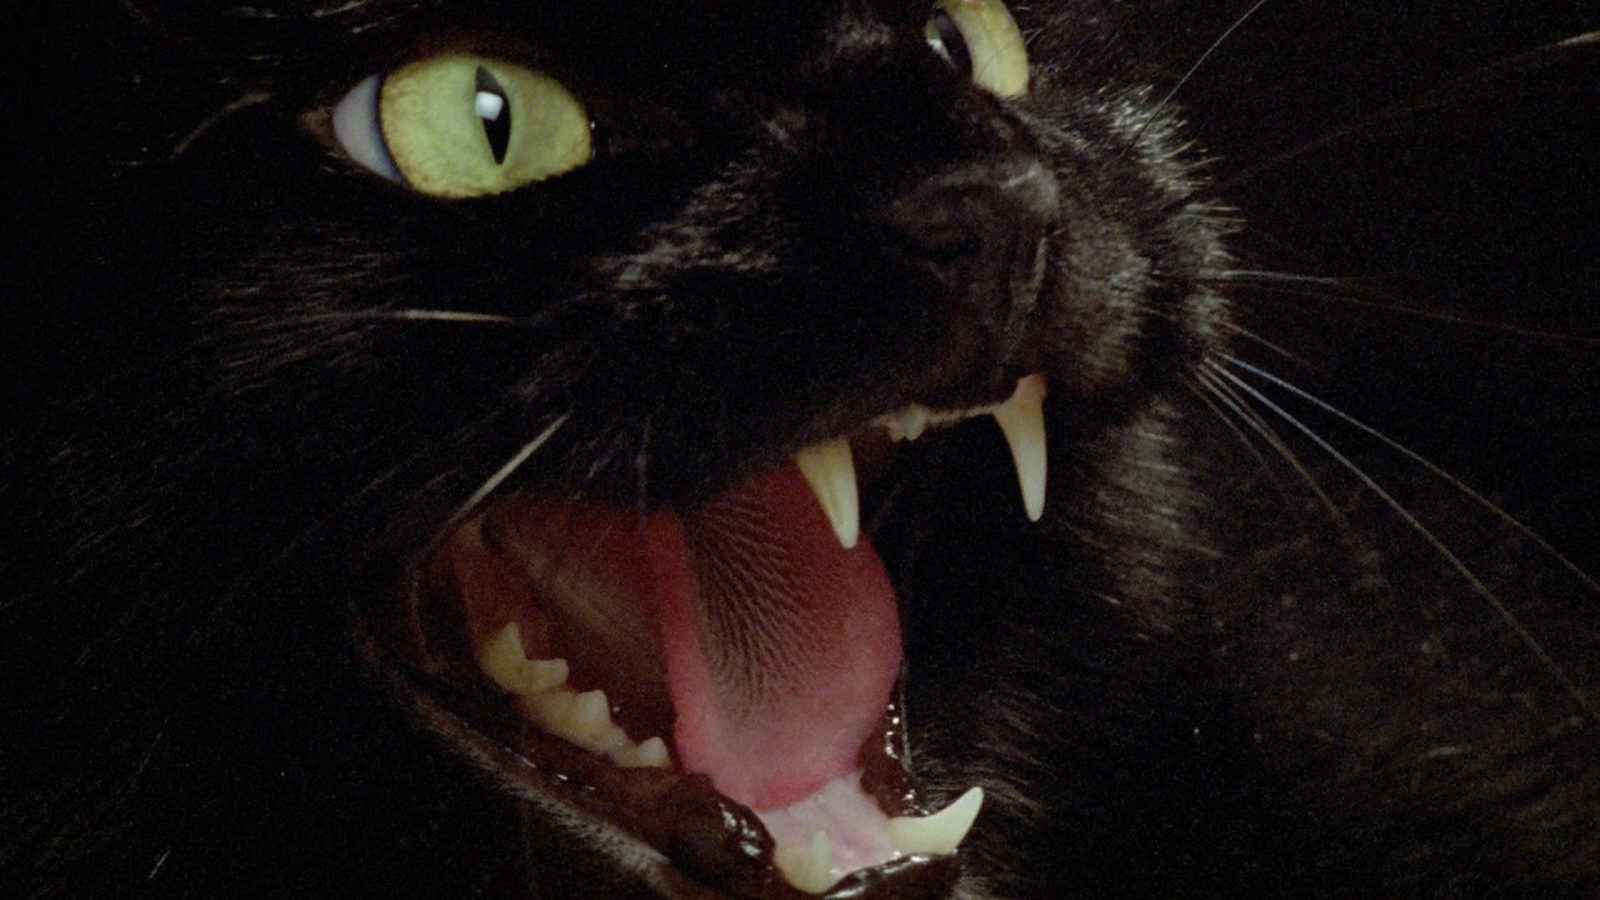 evil black cat eyes